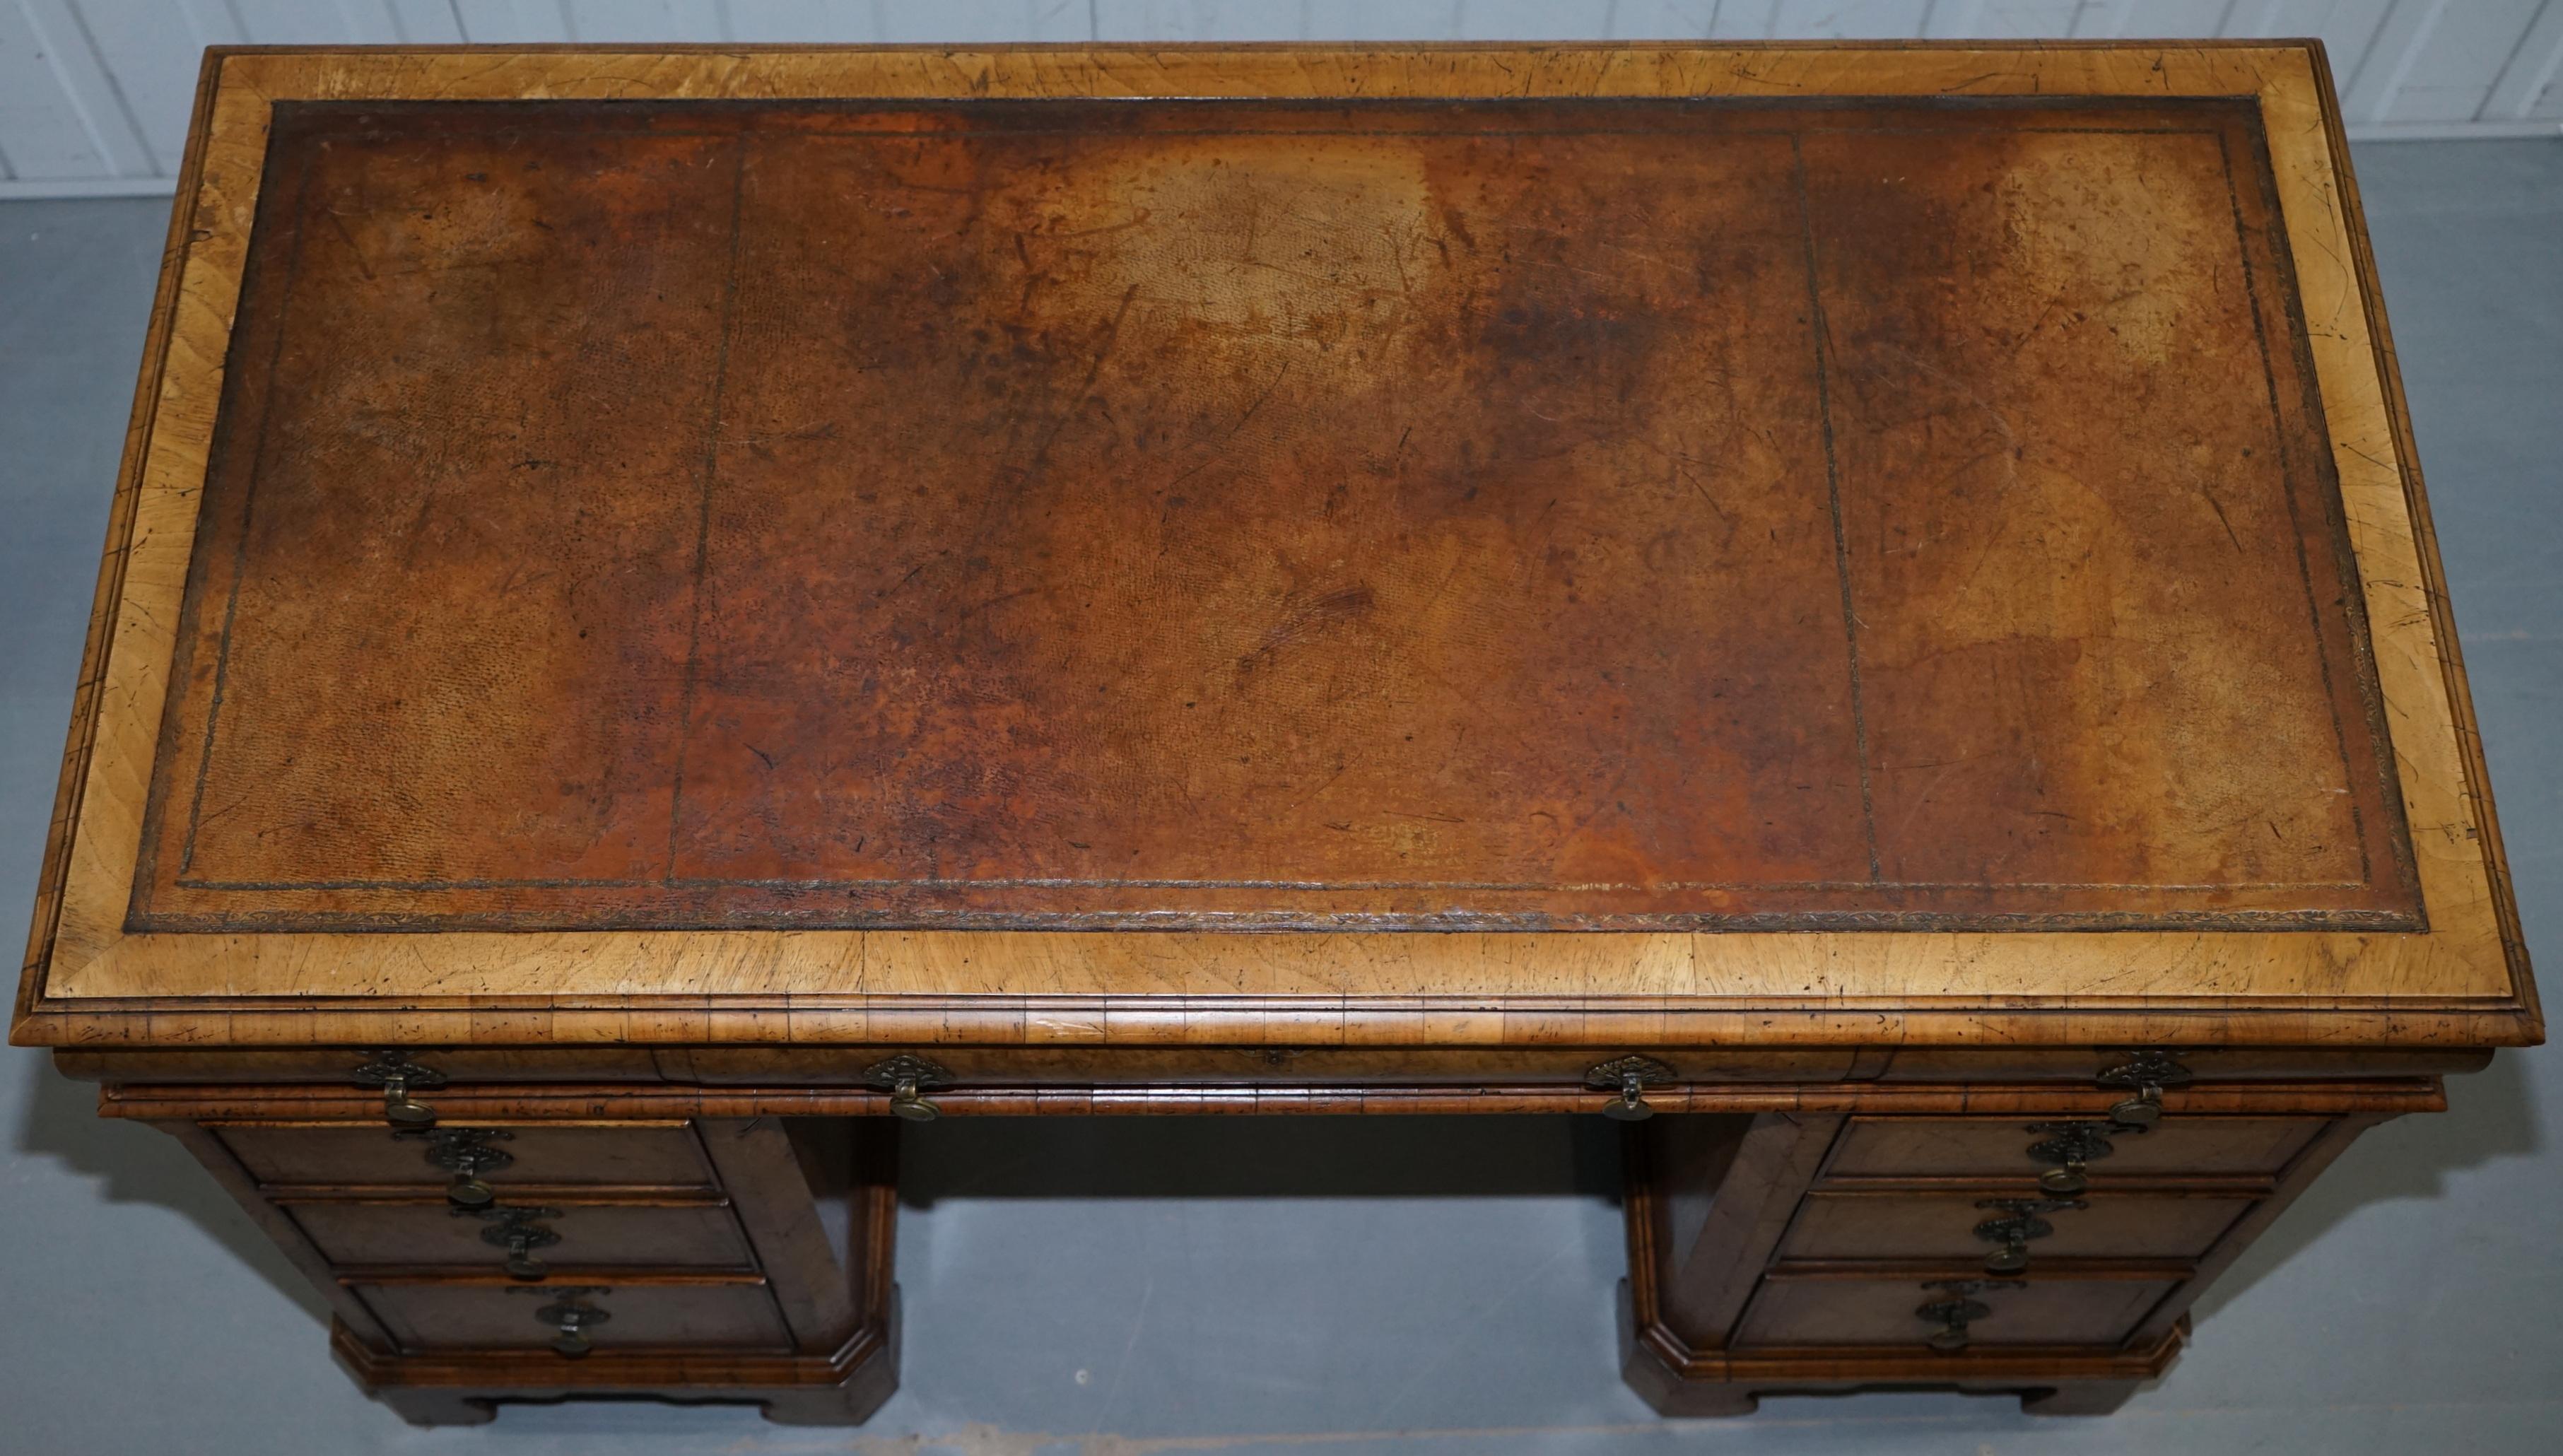 Hand-Crafted Extremely Rare circa 1815 Regency Solid Burr Walnut Cushion Drawer Pedestal Desk